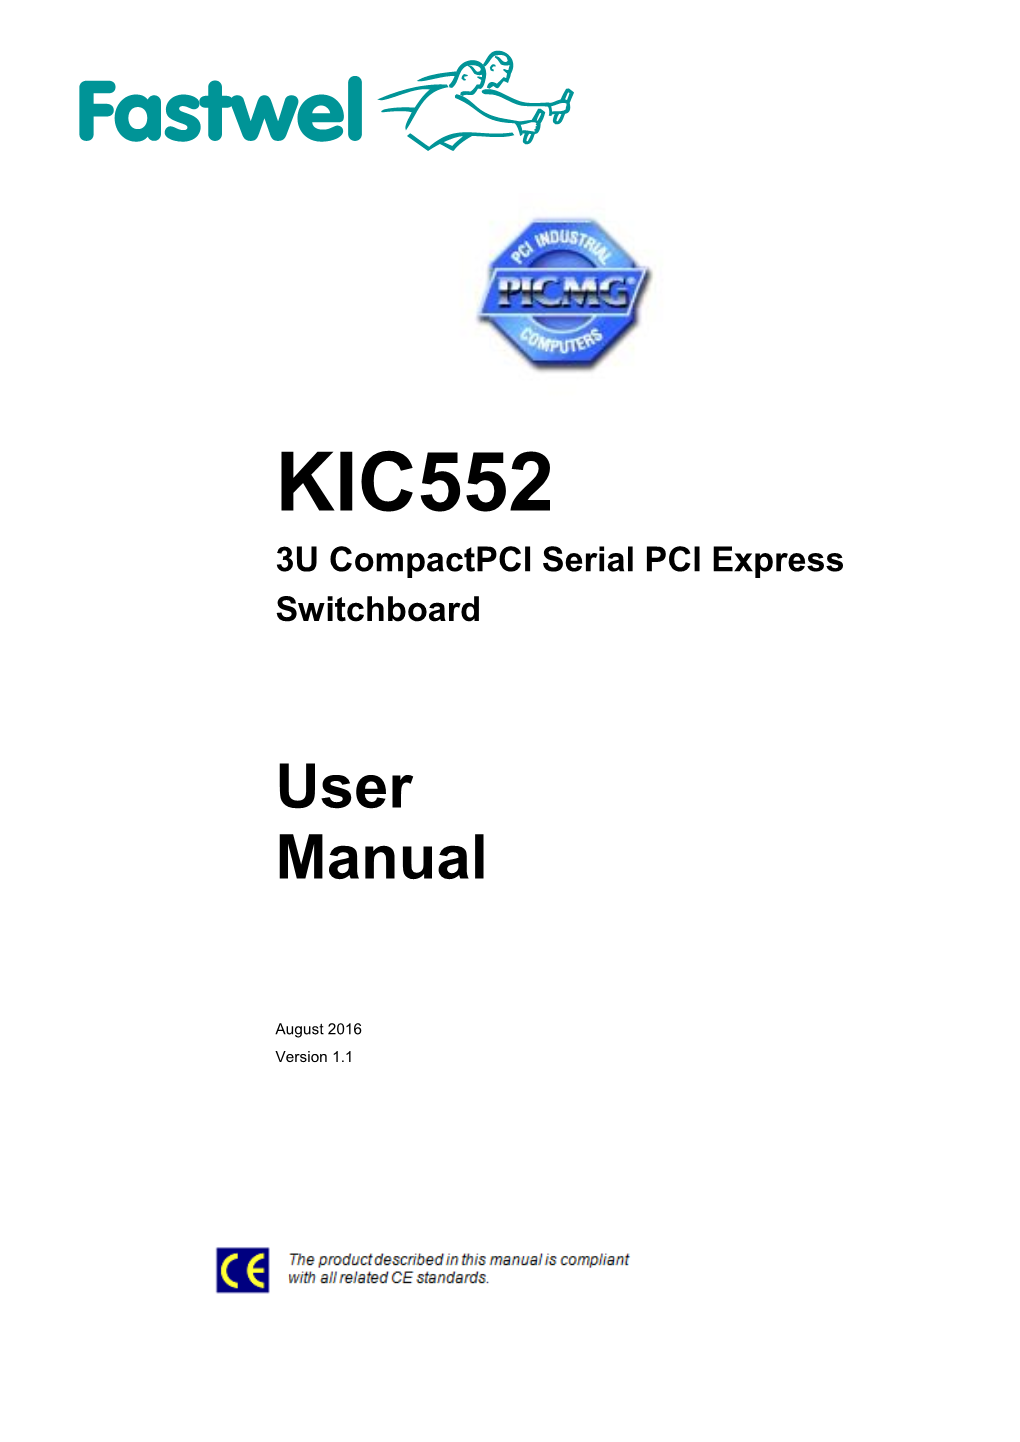 KIC552 3U Compactpci Serial PCI Express Switchboard